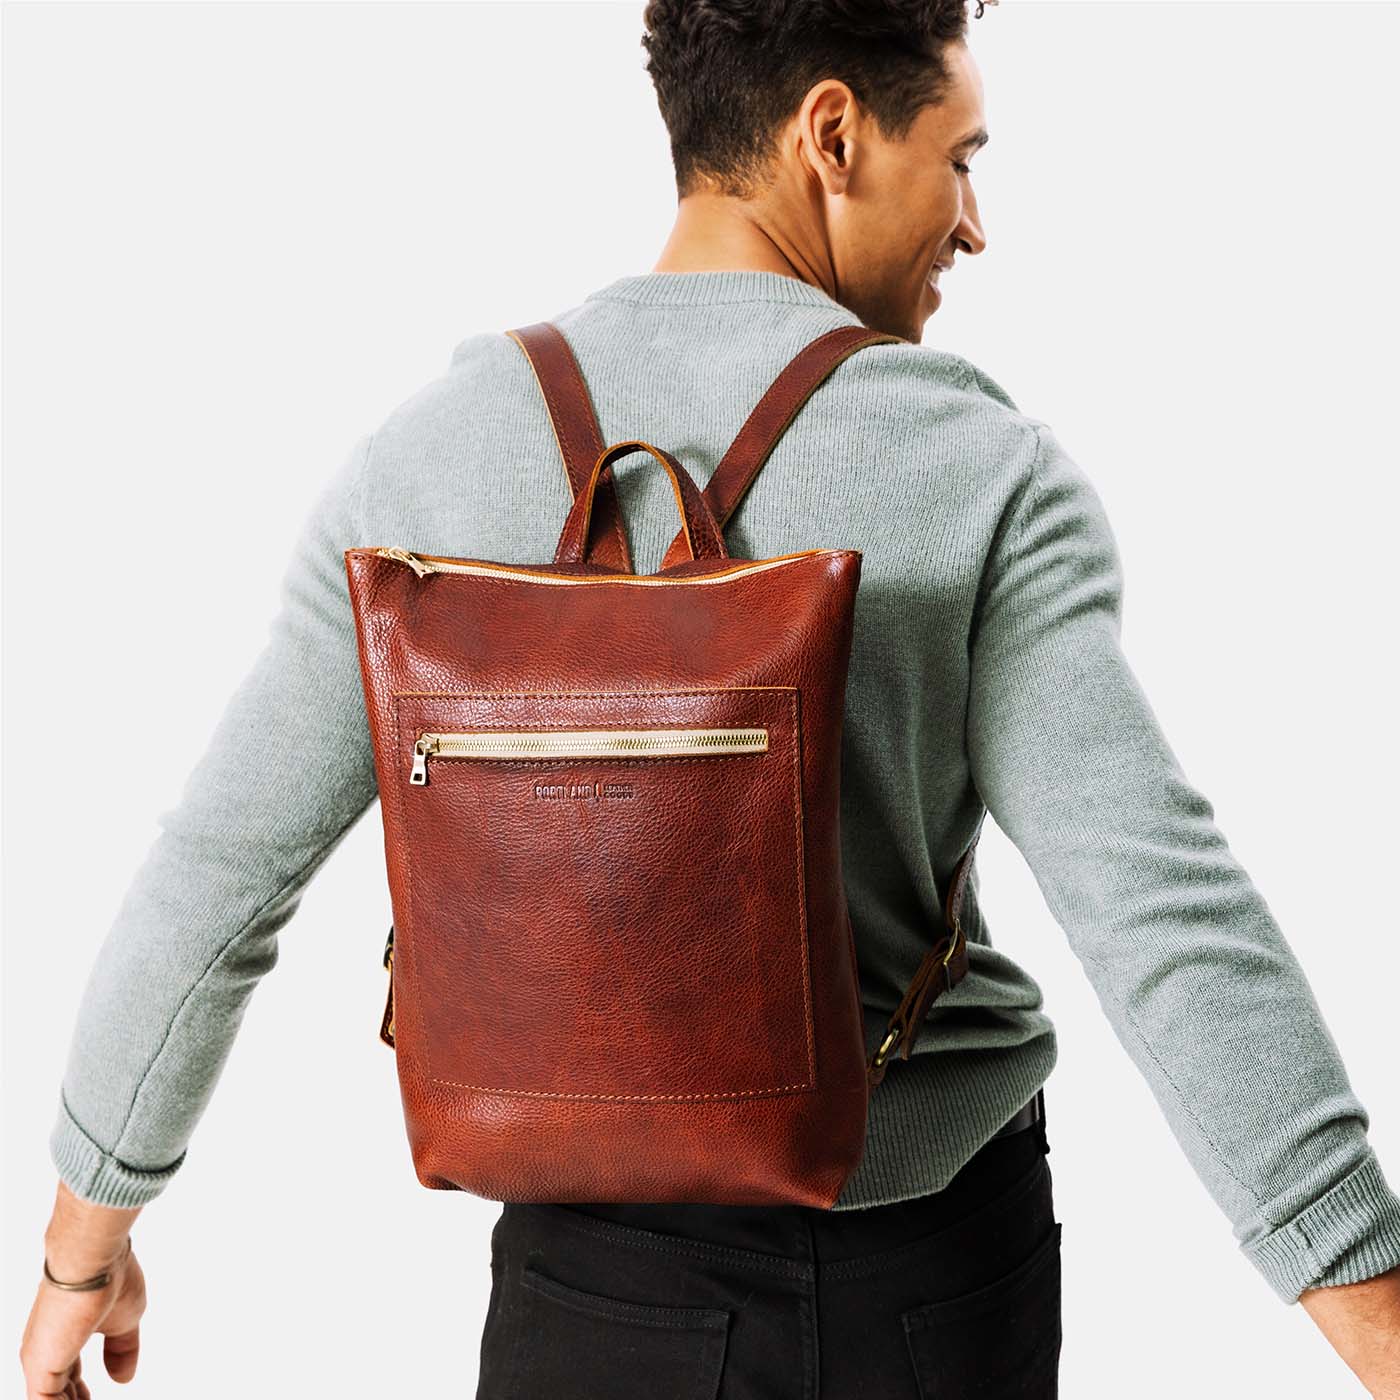 Adjustable Strap Women's Work Backpack, Zipper Commuter Purse